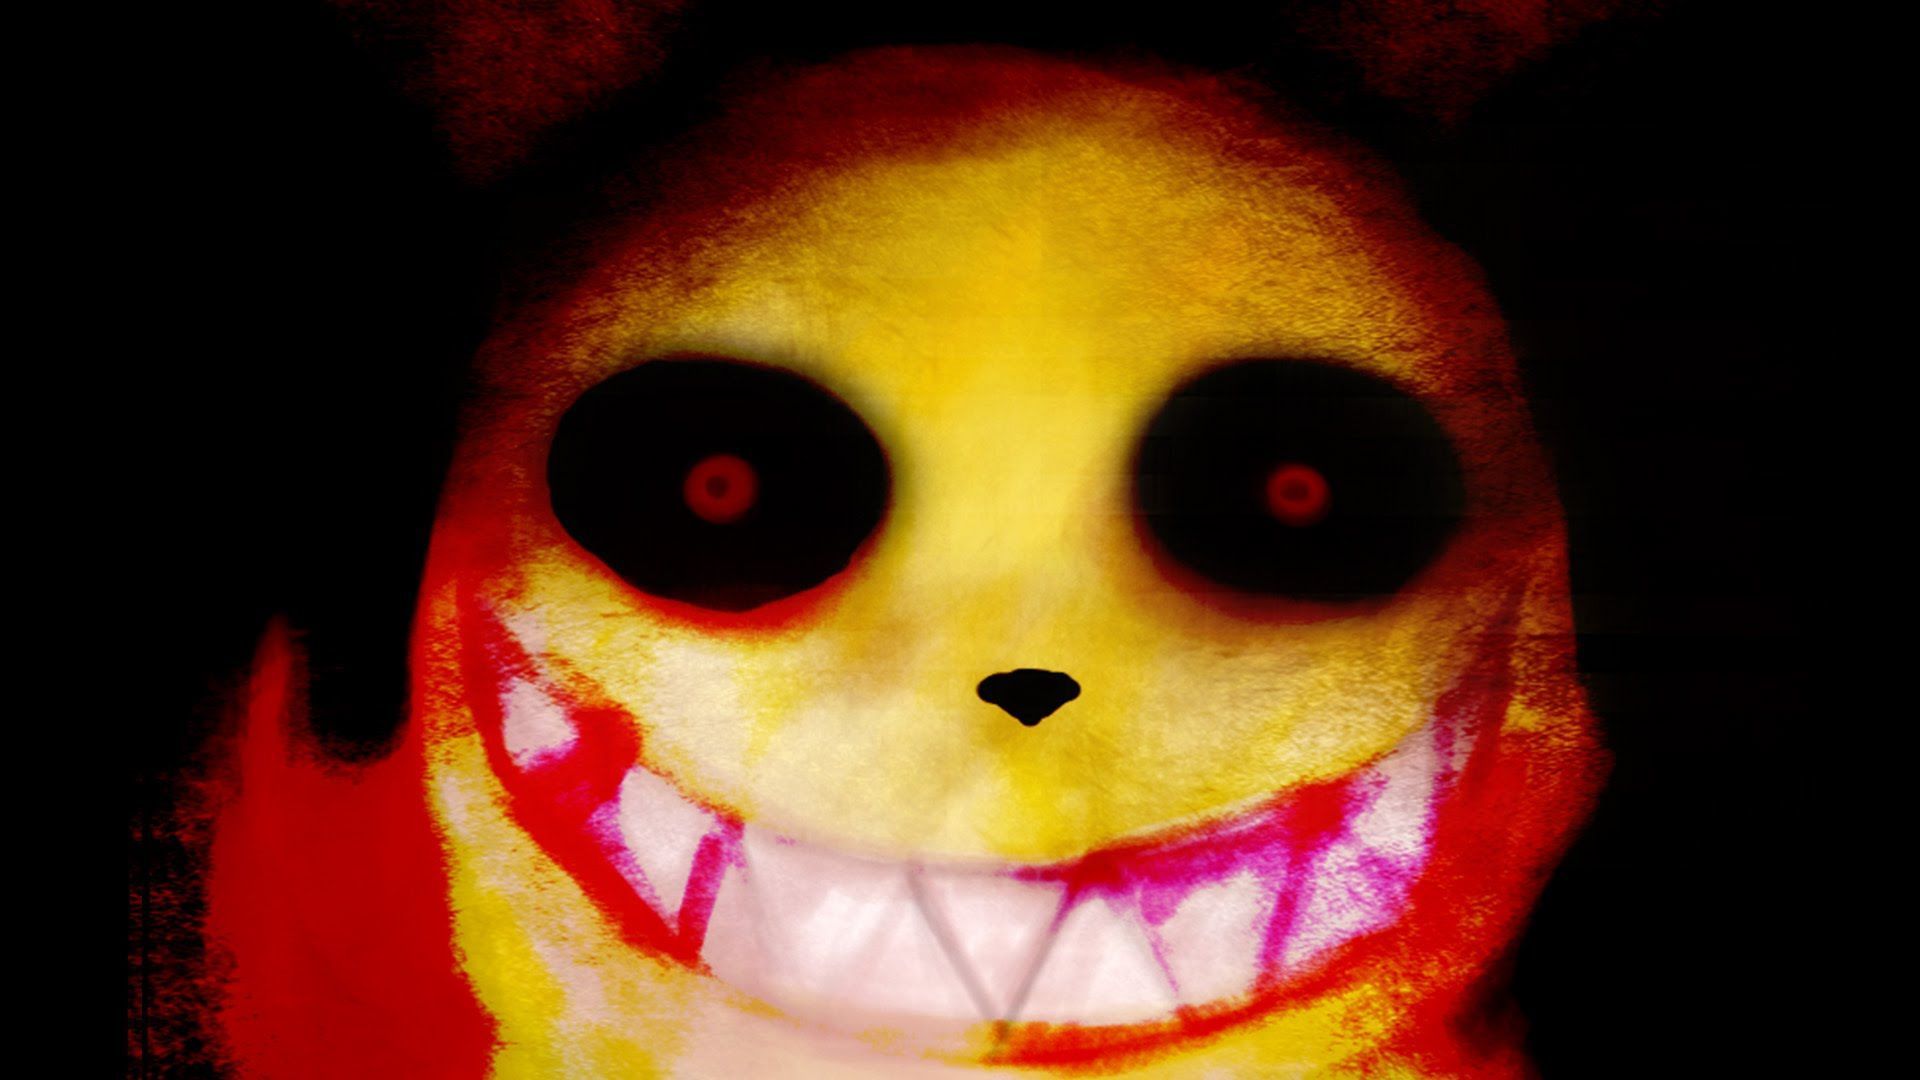 Pikachu.exe. Creepypasta characters, Creepypasta, Pikachu